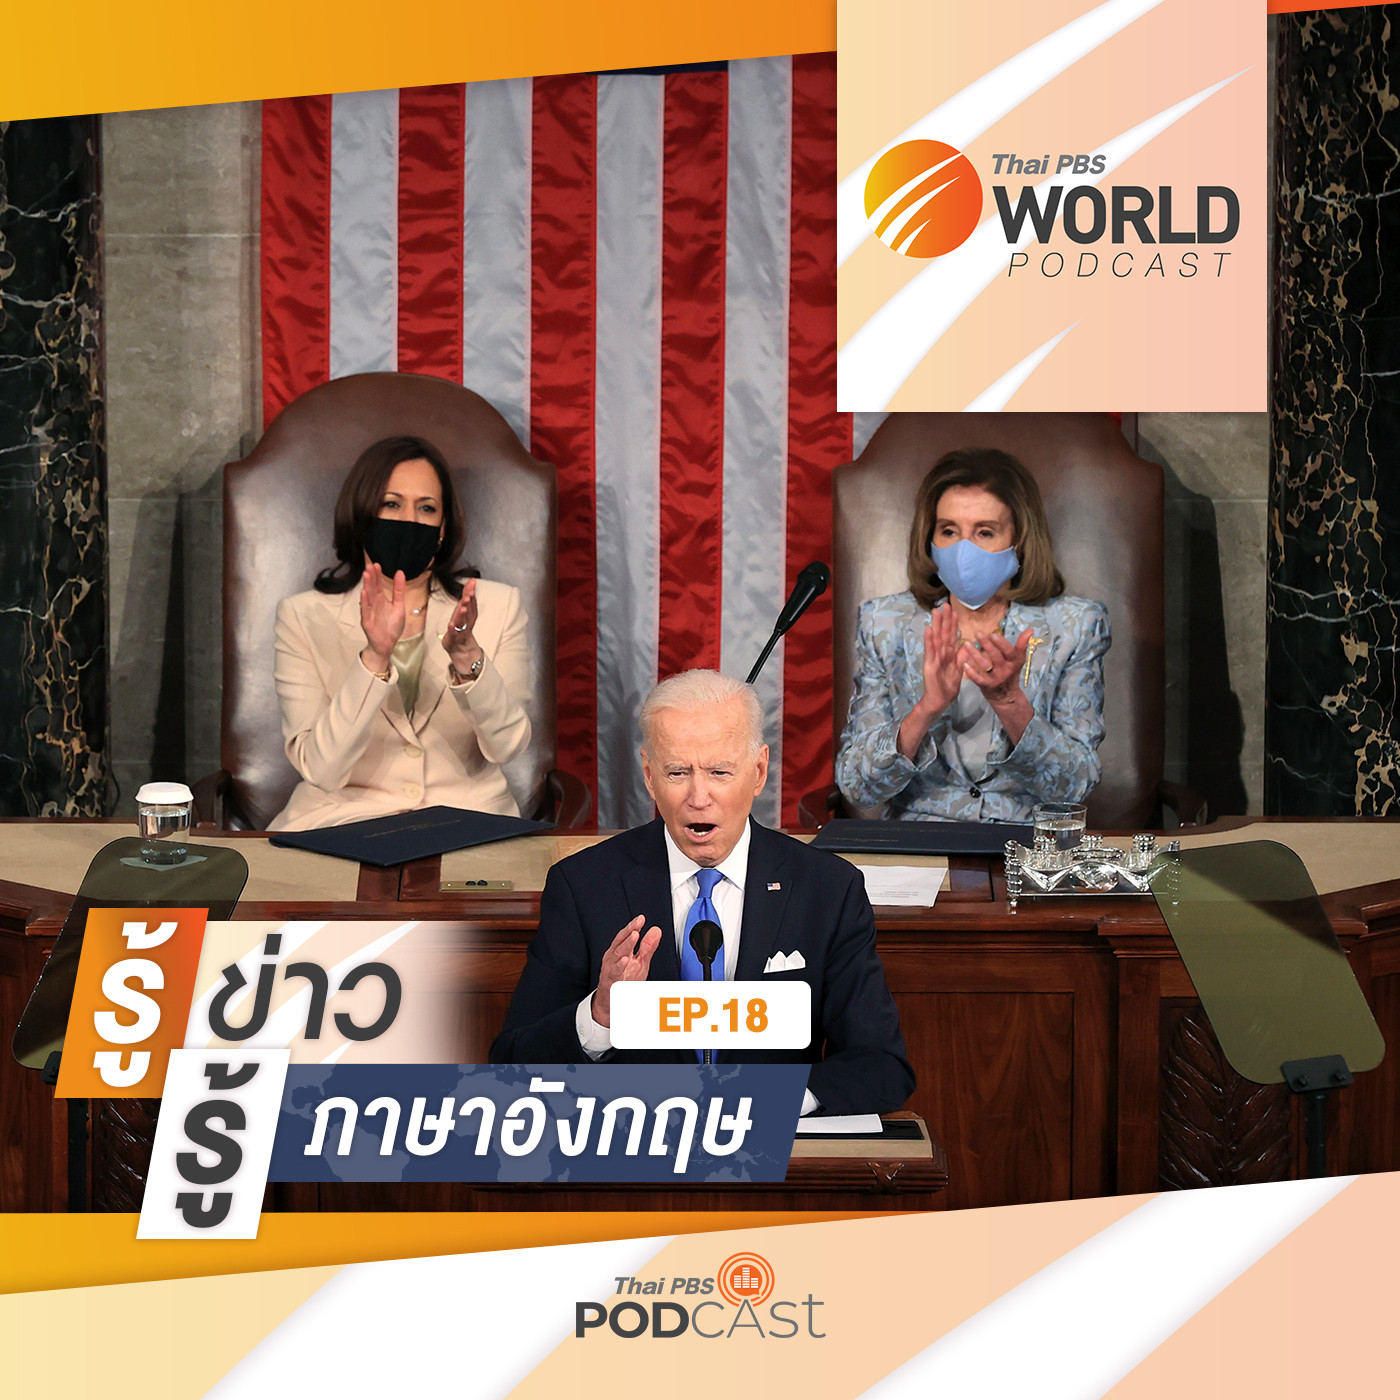 Thai PBS World Podcast - รู้ข่าว รู้ภาษาอังกฤษ EP. 18: รู้ข่าว รู้ภาษาอังกฤษ - วาทศิลป์ของ ”�